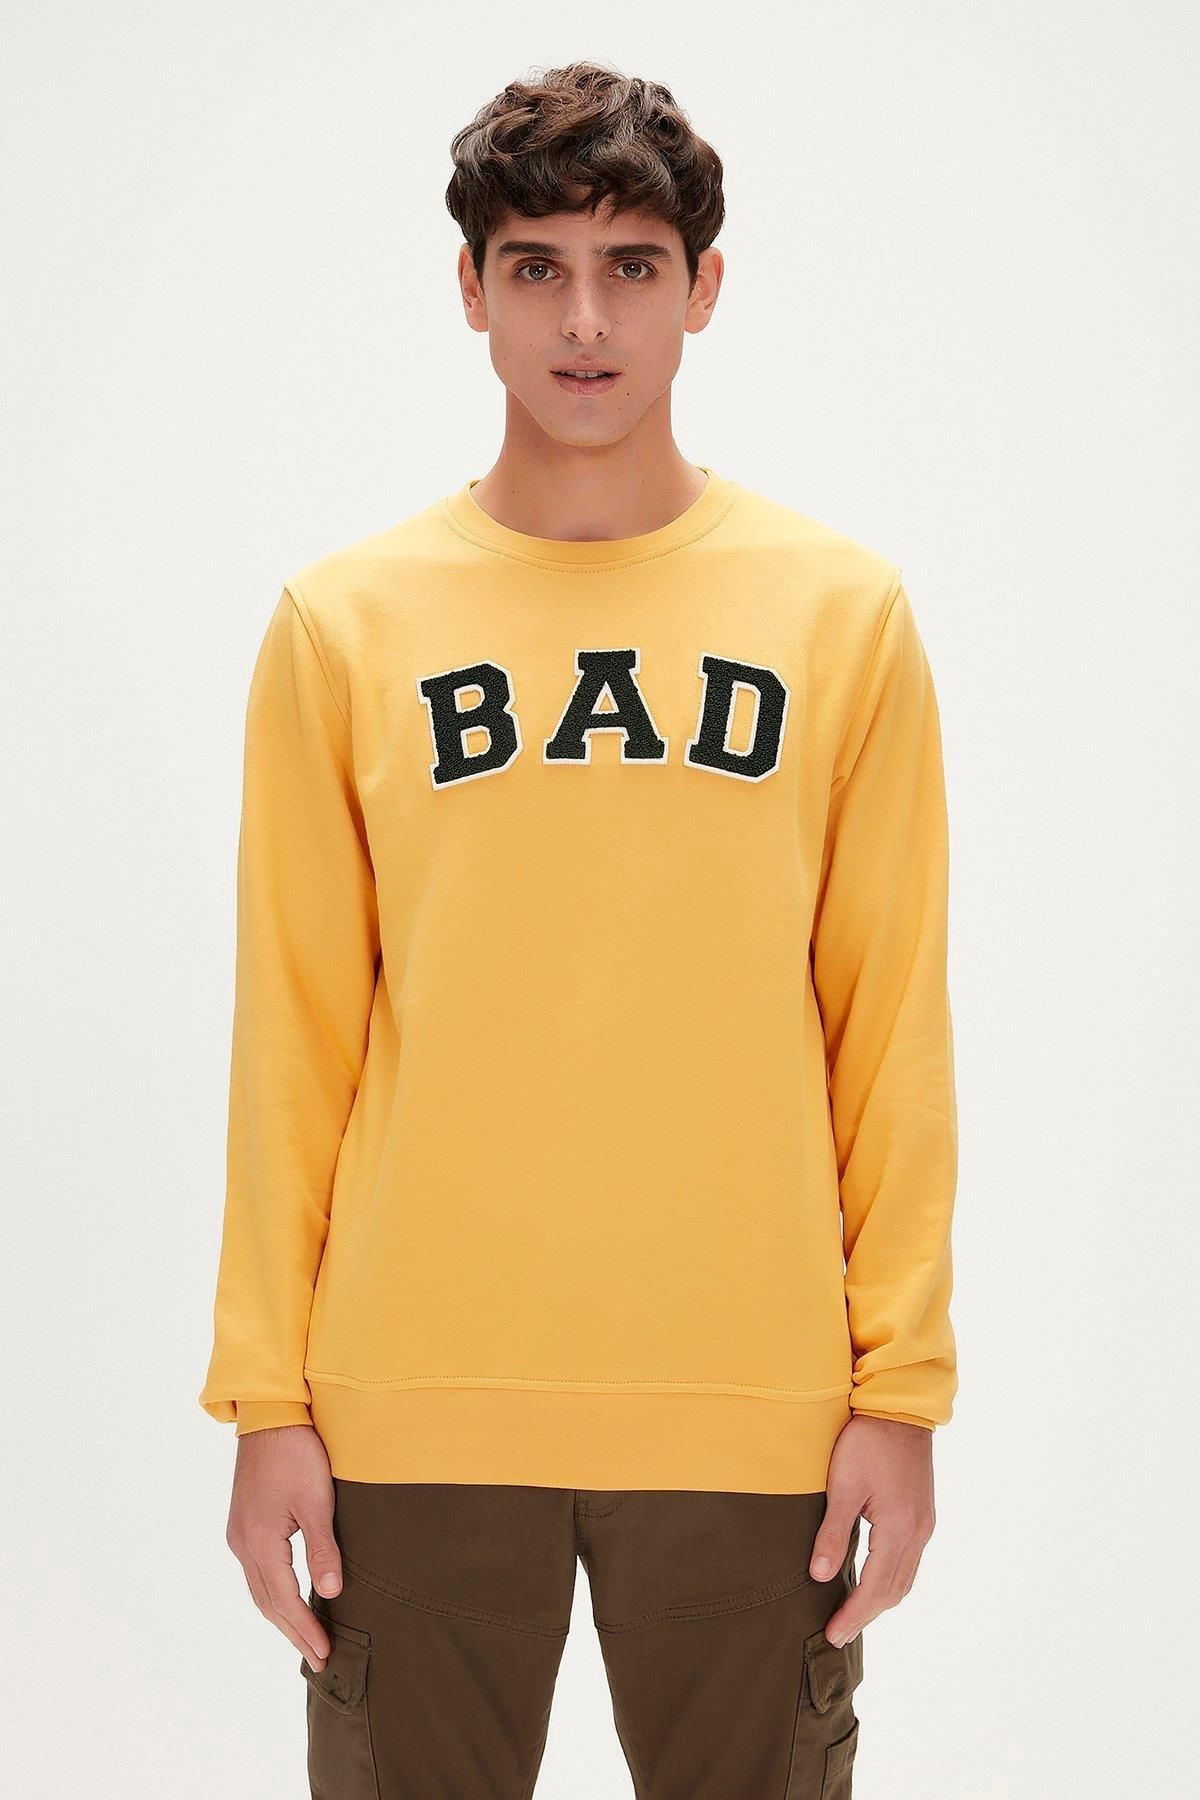 Bad Bear Bad Convex Erkek Sweatshirt